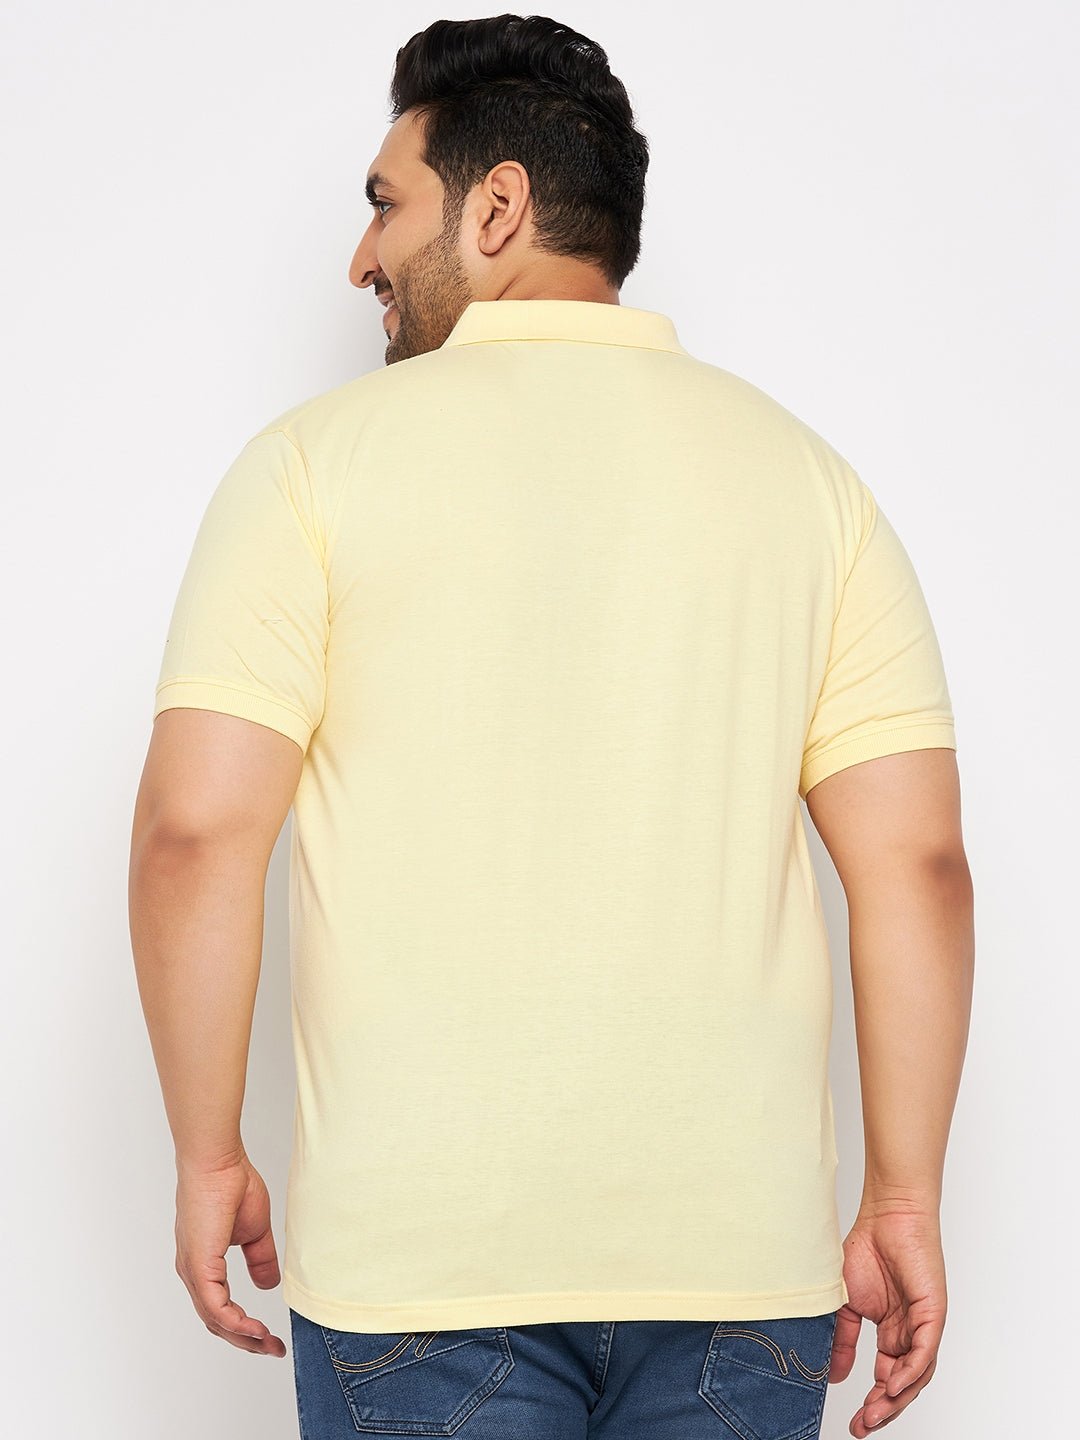 Plus Size Light Yellow Polo T-Shirt - clubyork